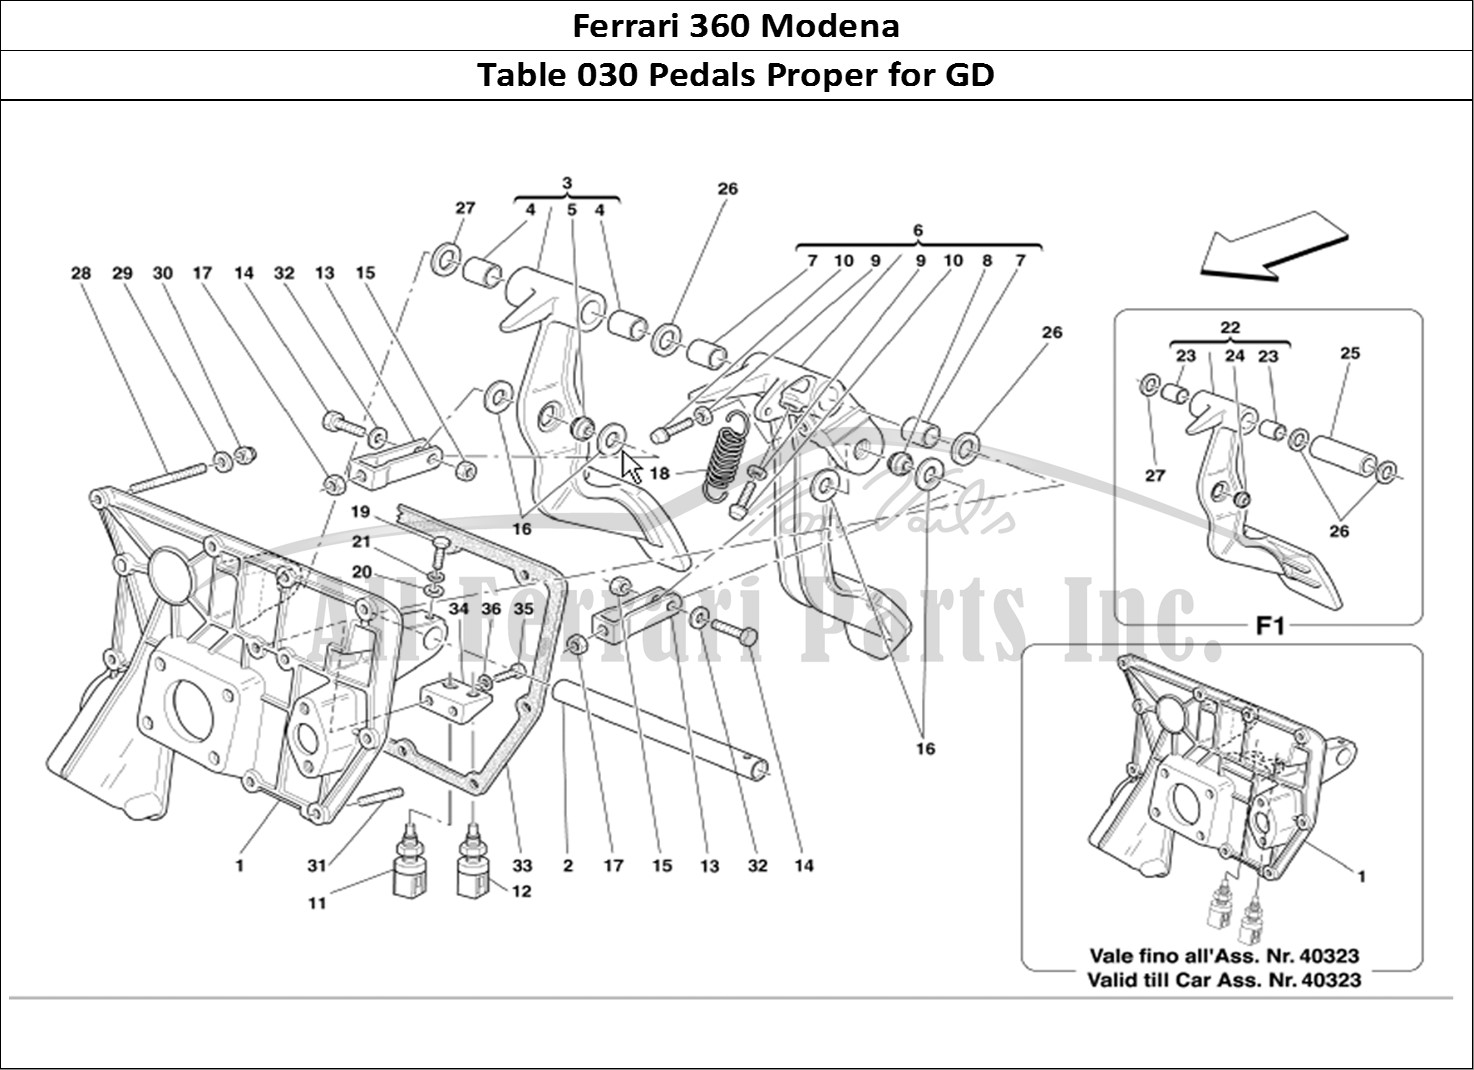 Ferrari Parts Ferrari 360 Modena Page 030 Pedals -Valid for GD-